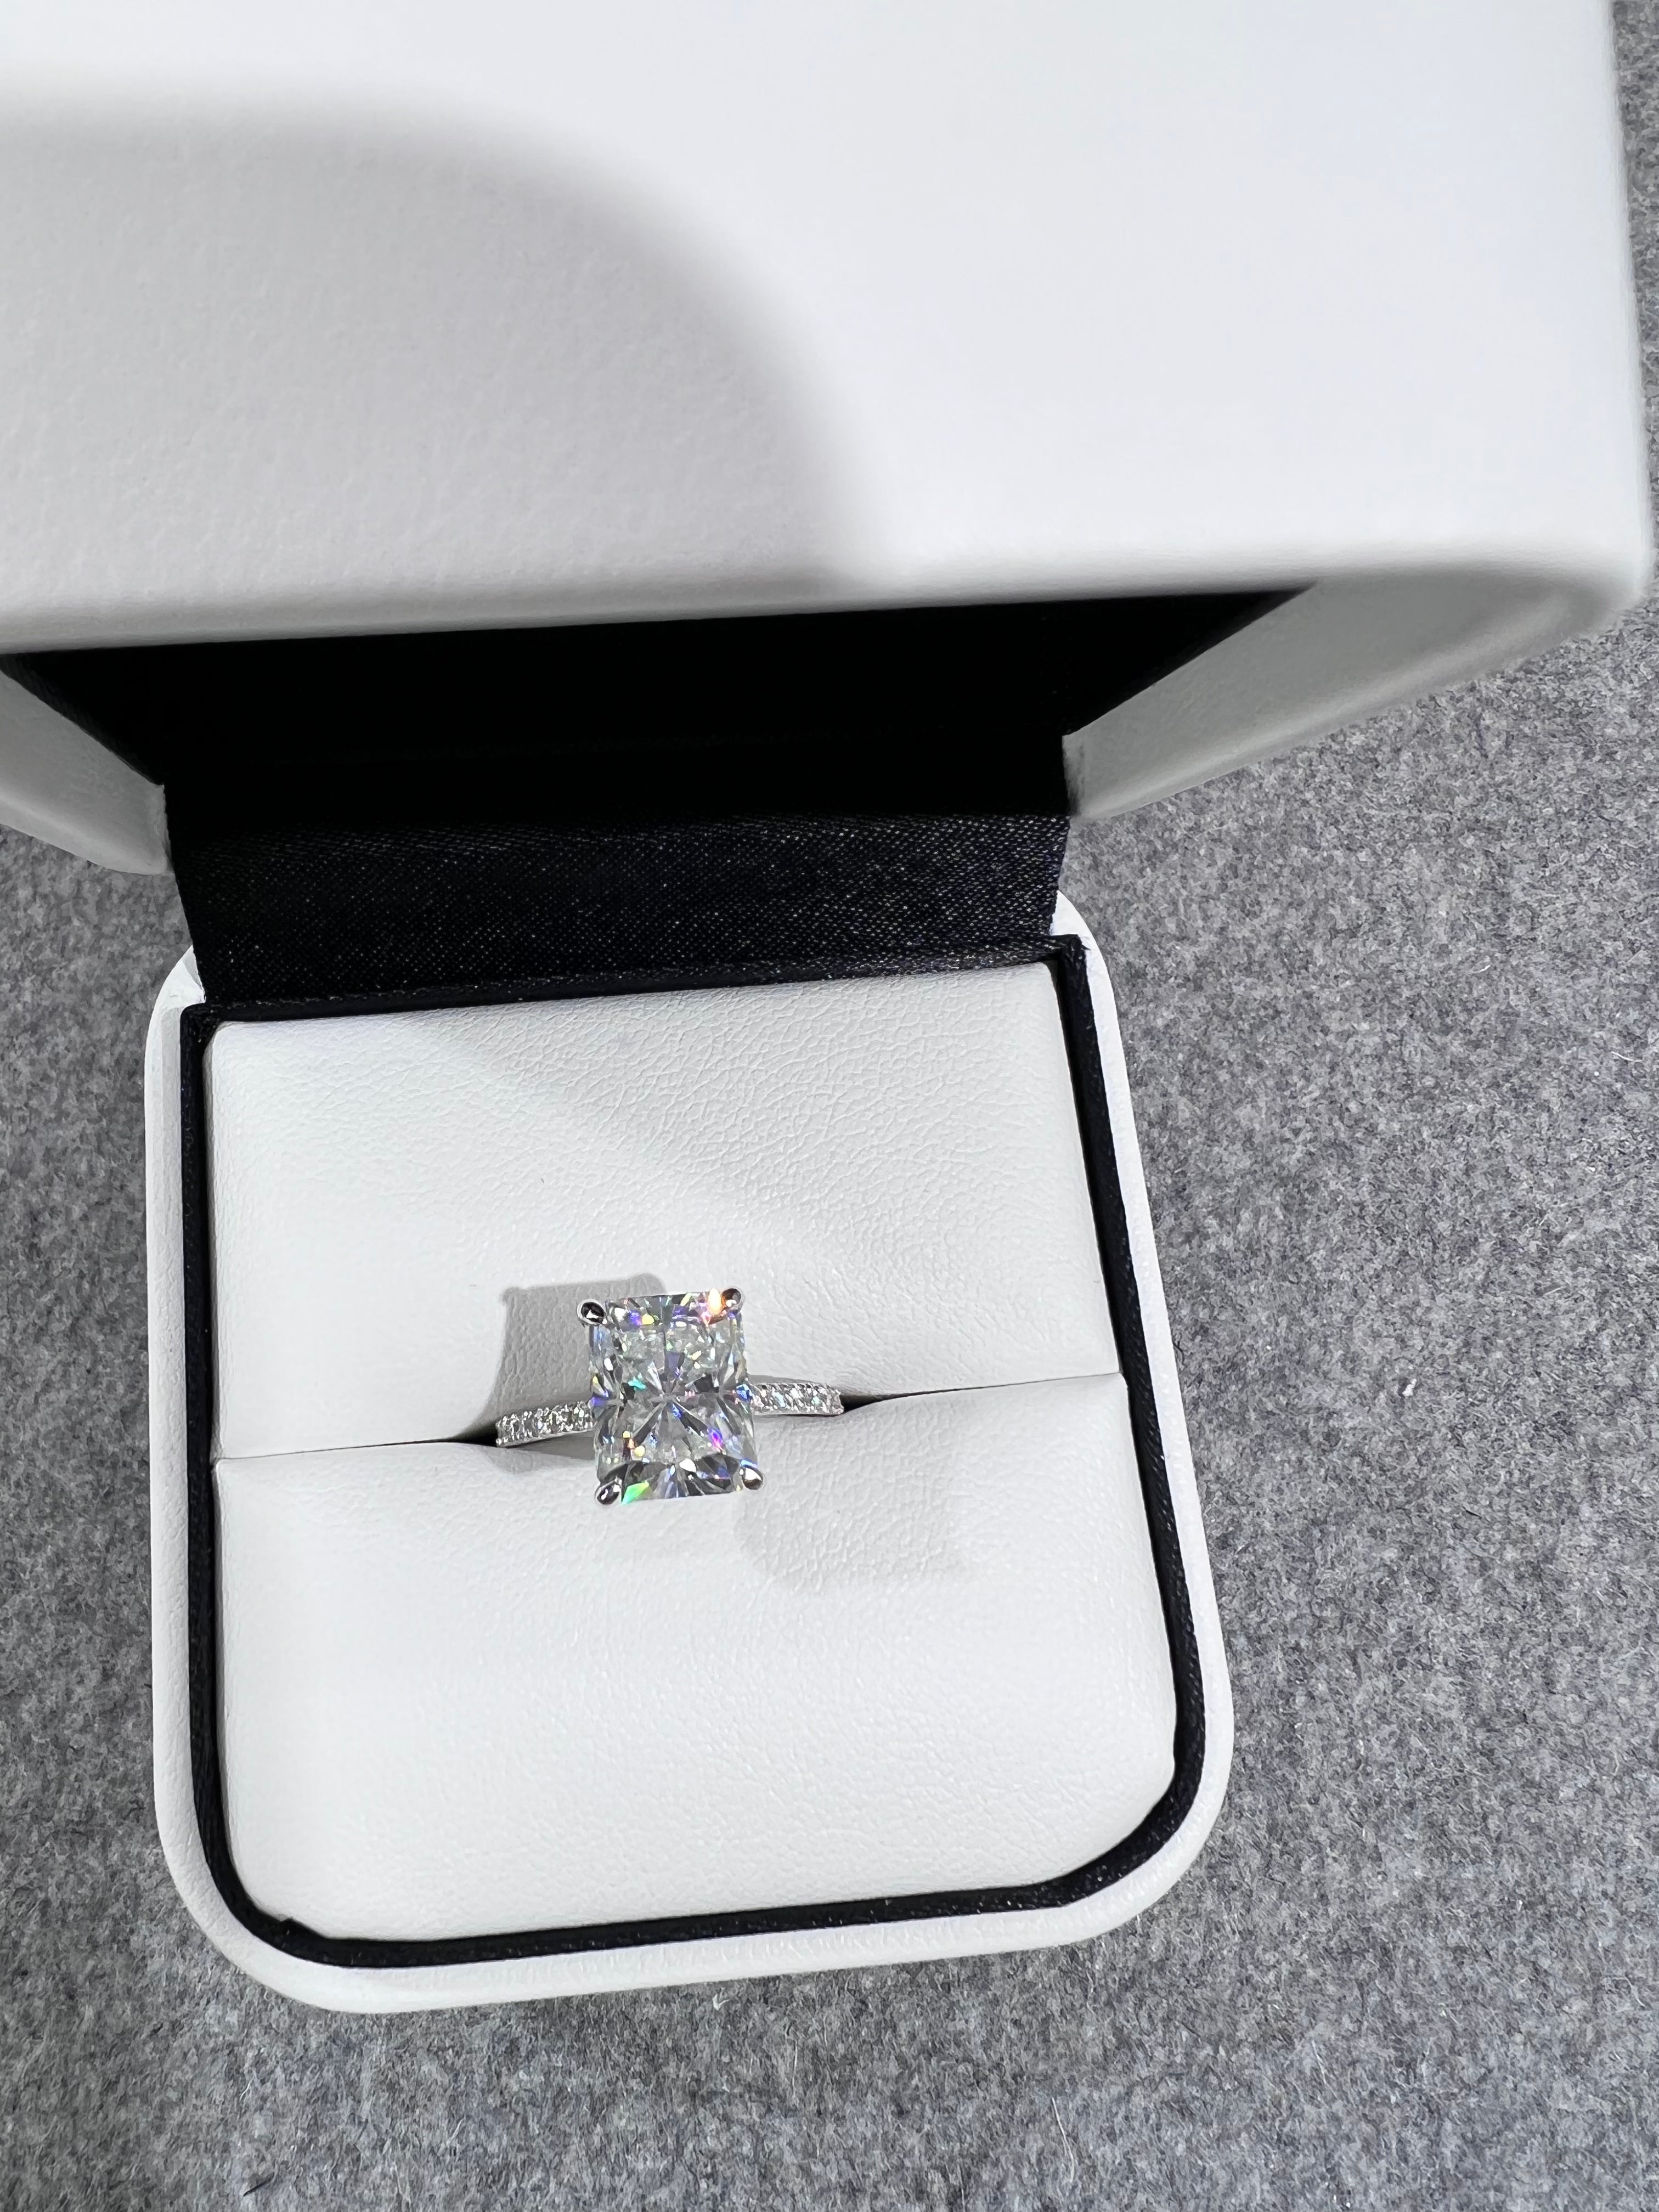 "Luna" 4ct Radiant/Emerald Cut Moissanite Ring